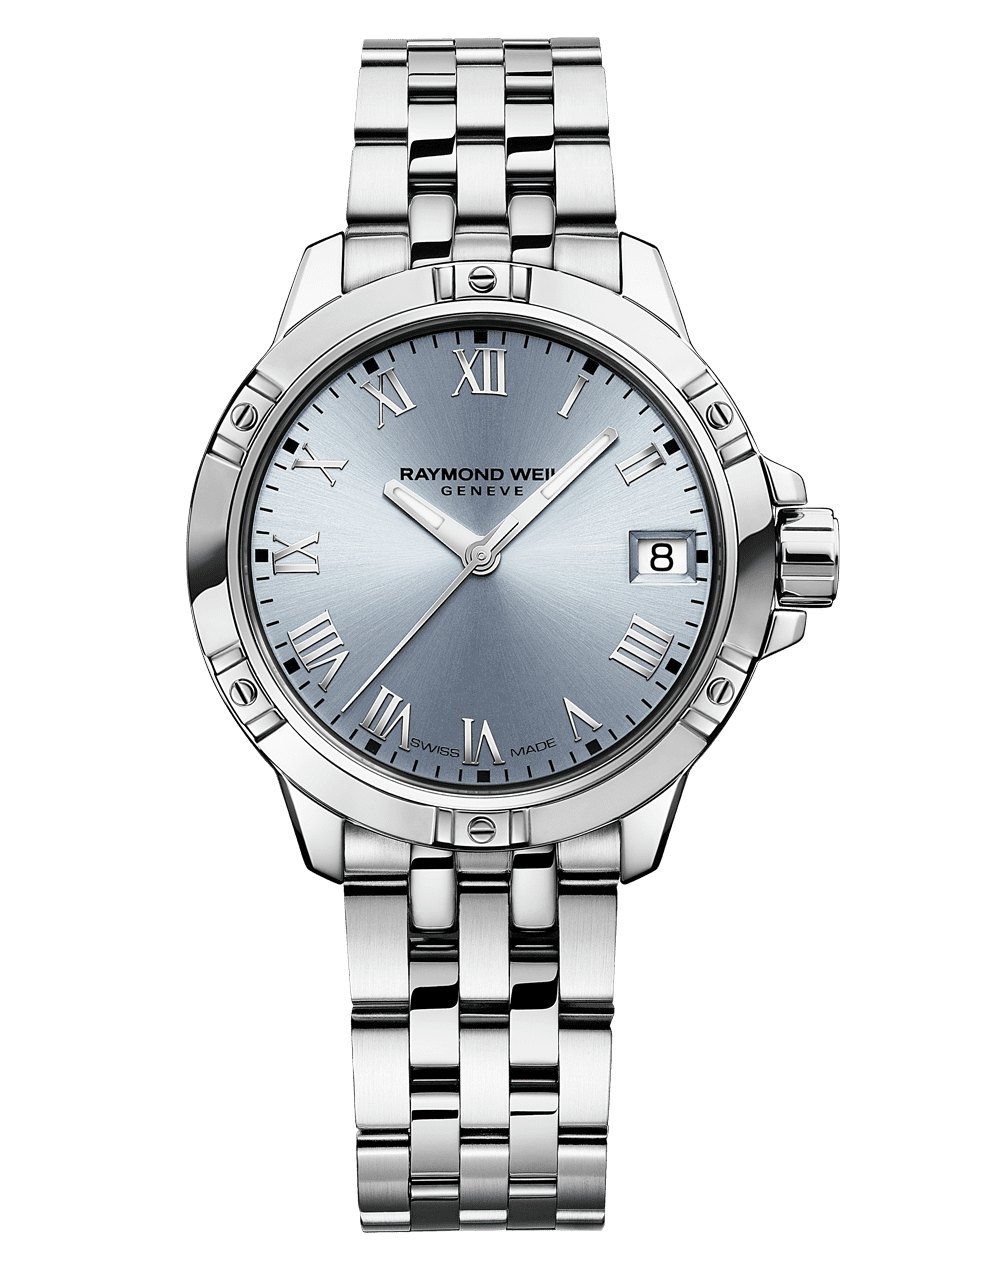 Raymond Weil Tango Classic Ladies Quartz Blue Dial Steel Date Watch, 30mm (5960-ST-00500)
Stainless Steel Bracelet, Blue Dial, Indexes, Stainless Steel Case